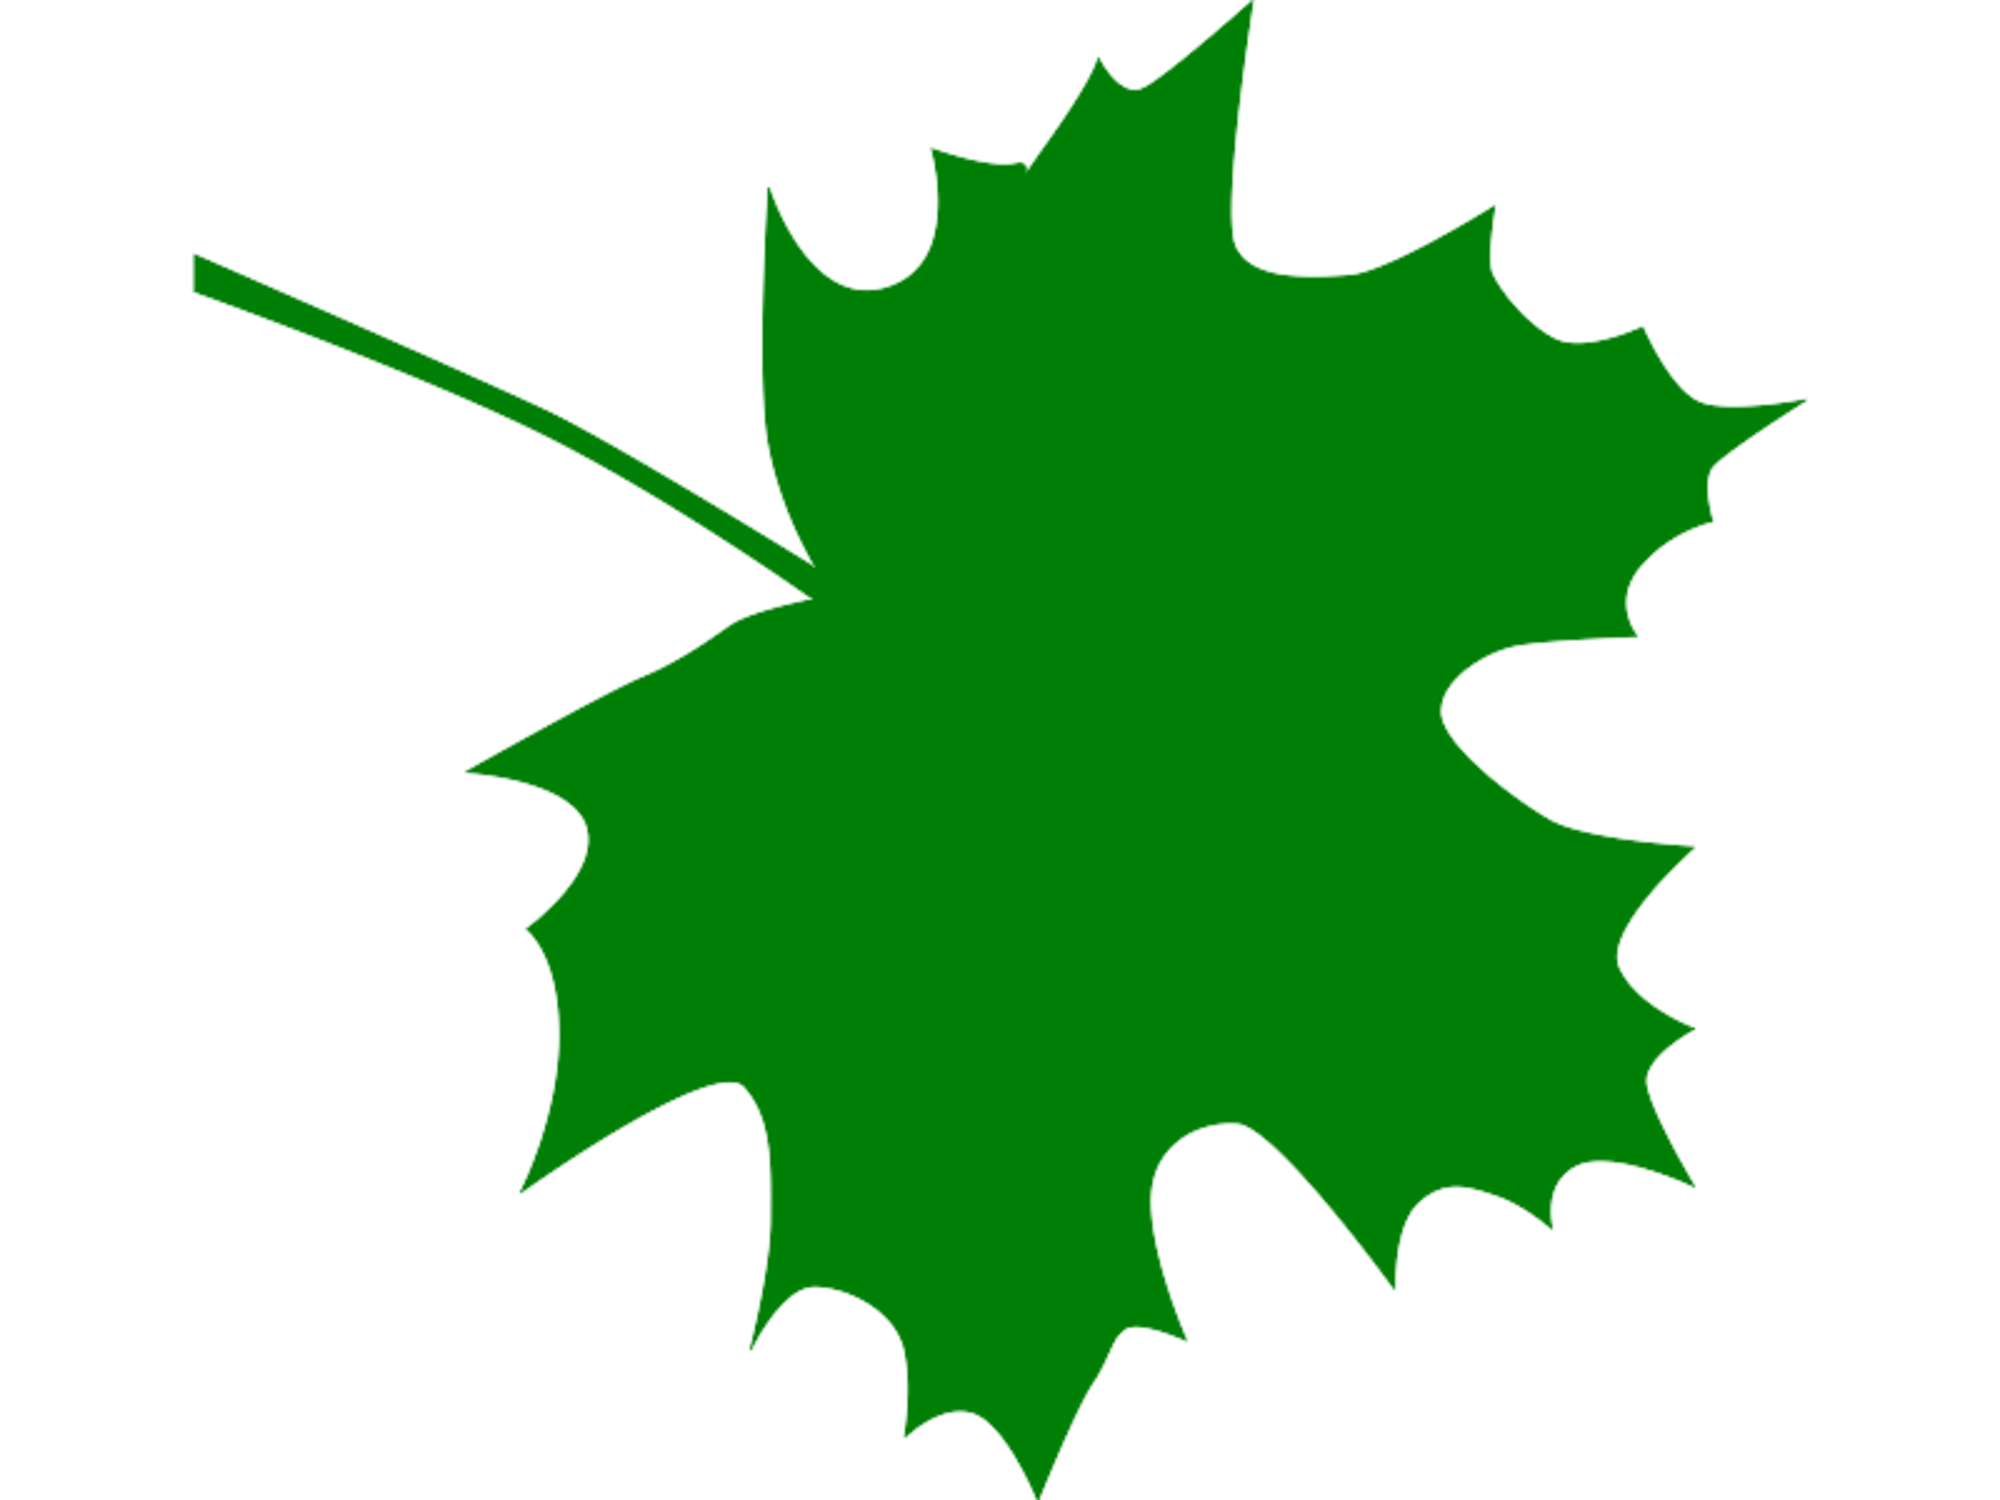 Acer saccharum (Sugar Maple)